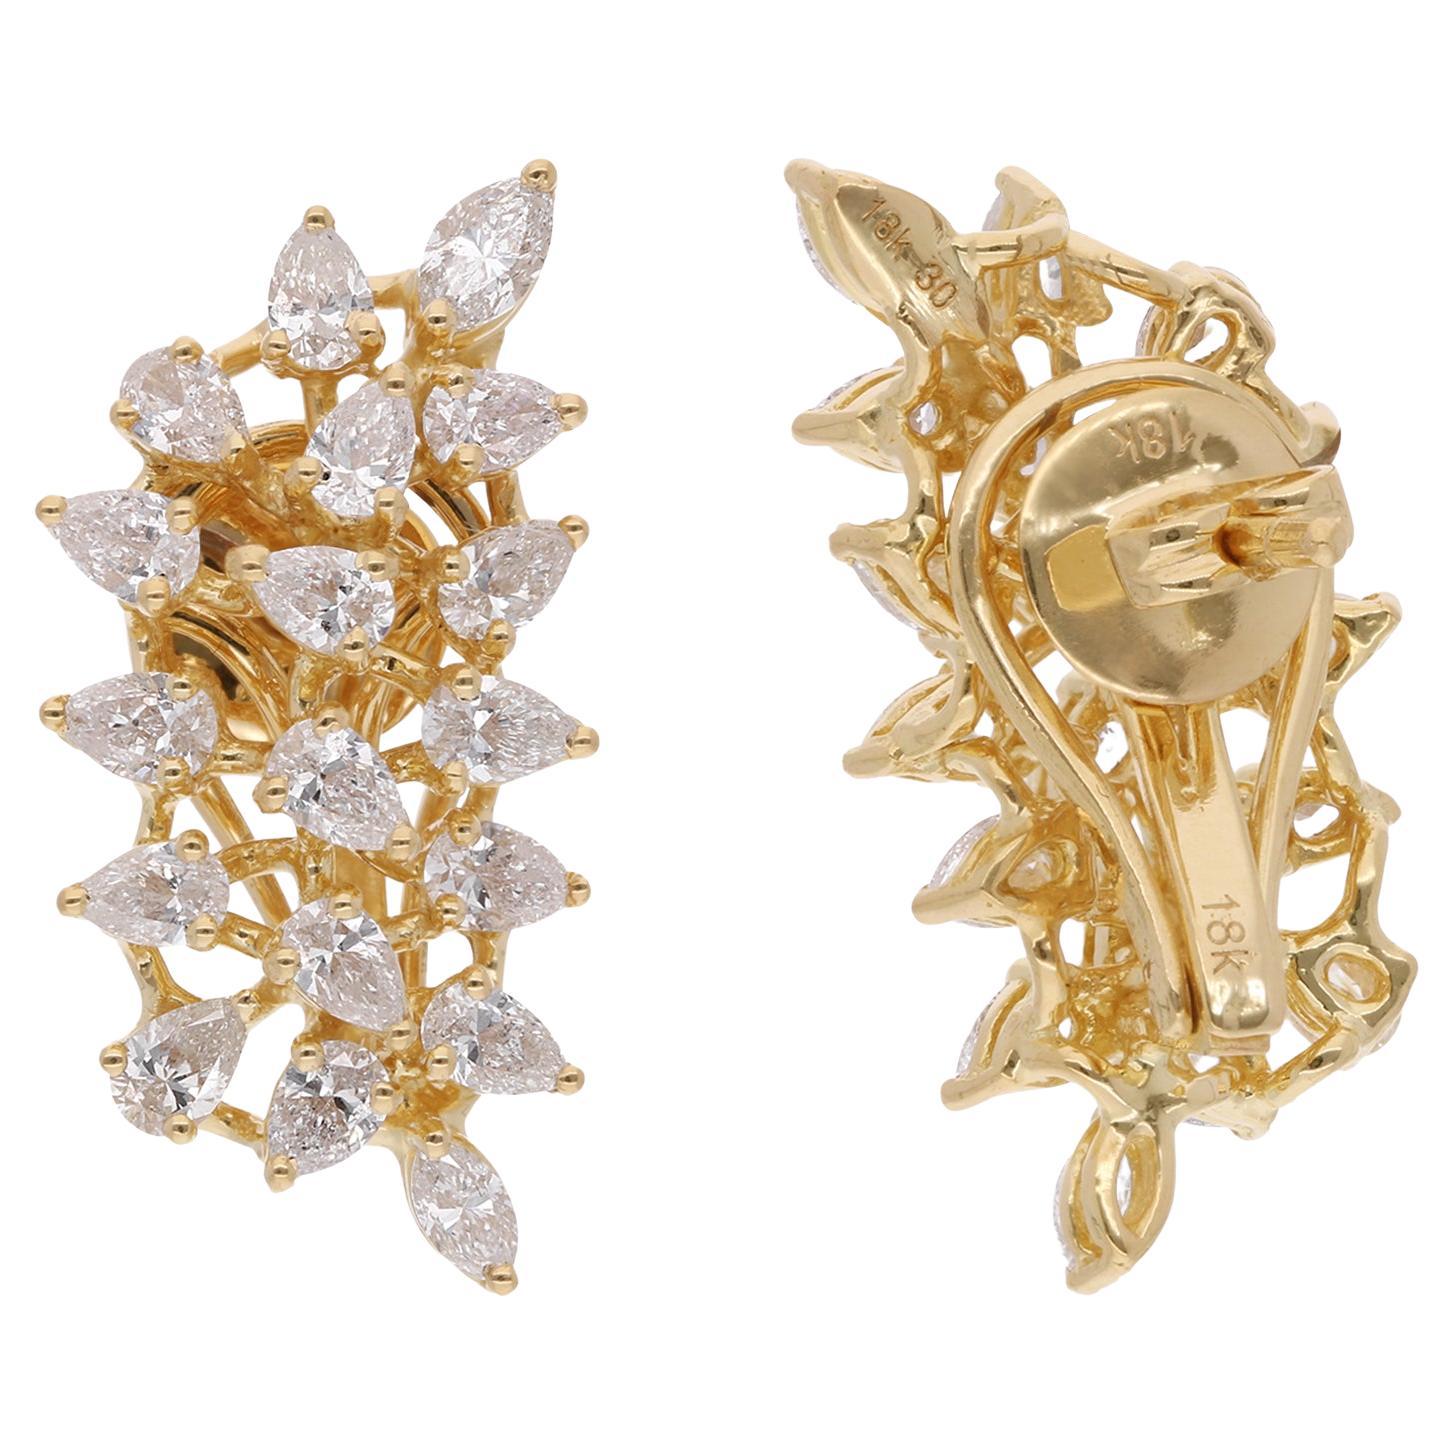 2.9 Carat SI Clarity HI Color Pear Diamond Earrings 18 Karat Yellow Gold Jewelry For Sale